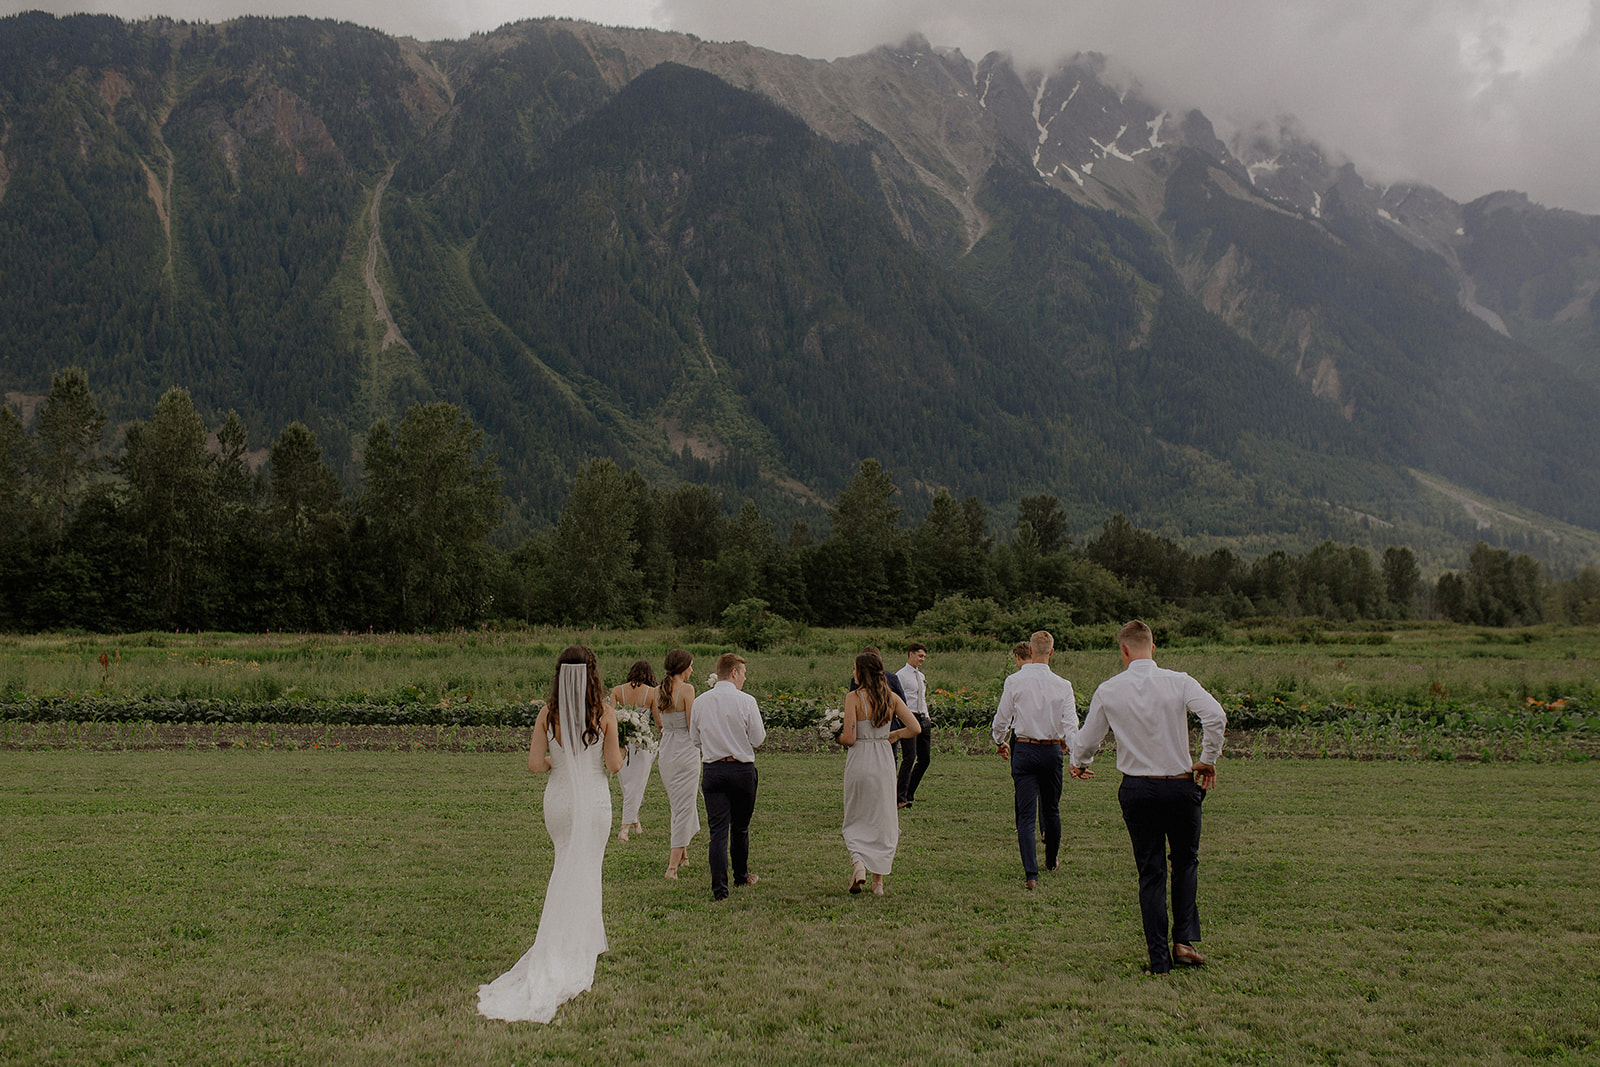 Vancouver wedding photographer captures photos of couple having their wedding at North Arm Farm in Pemberton